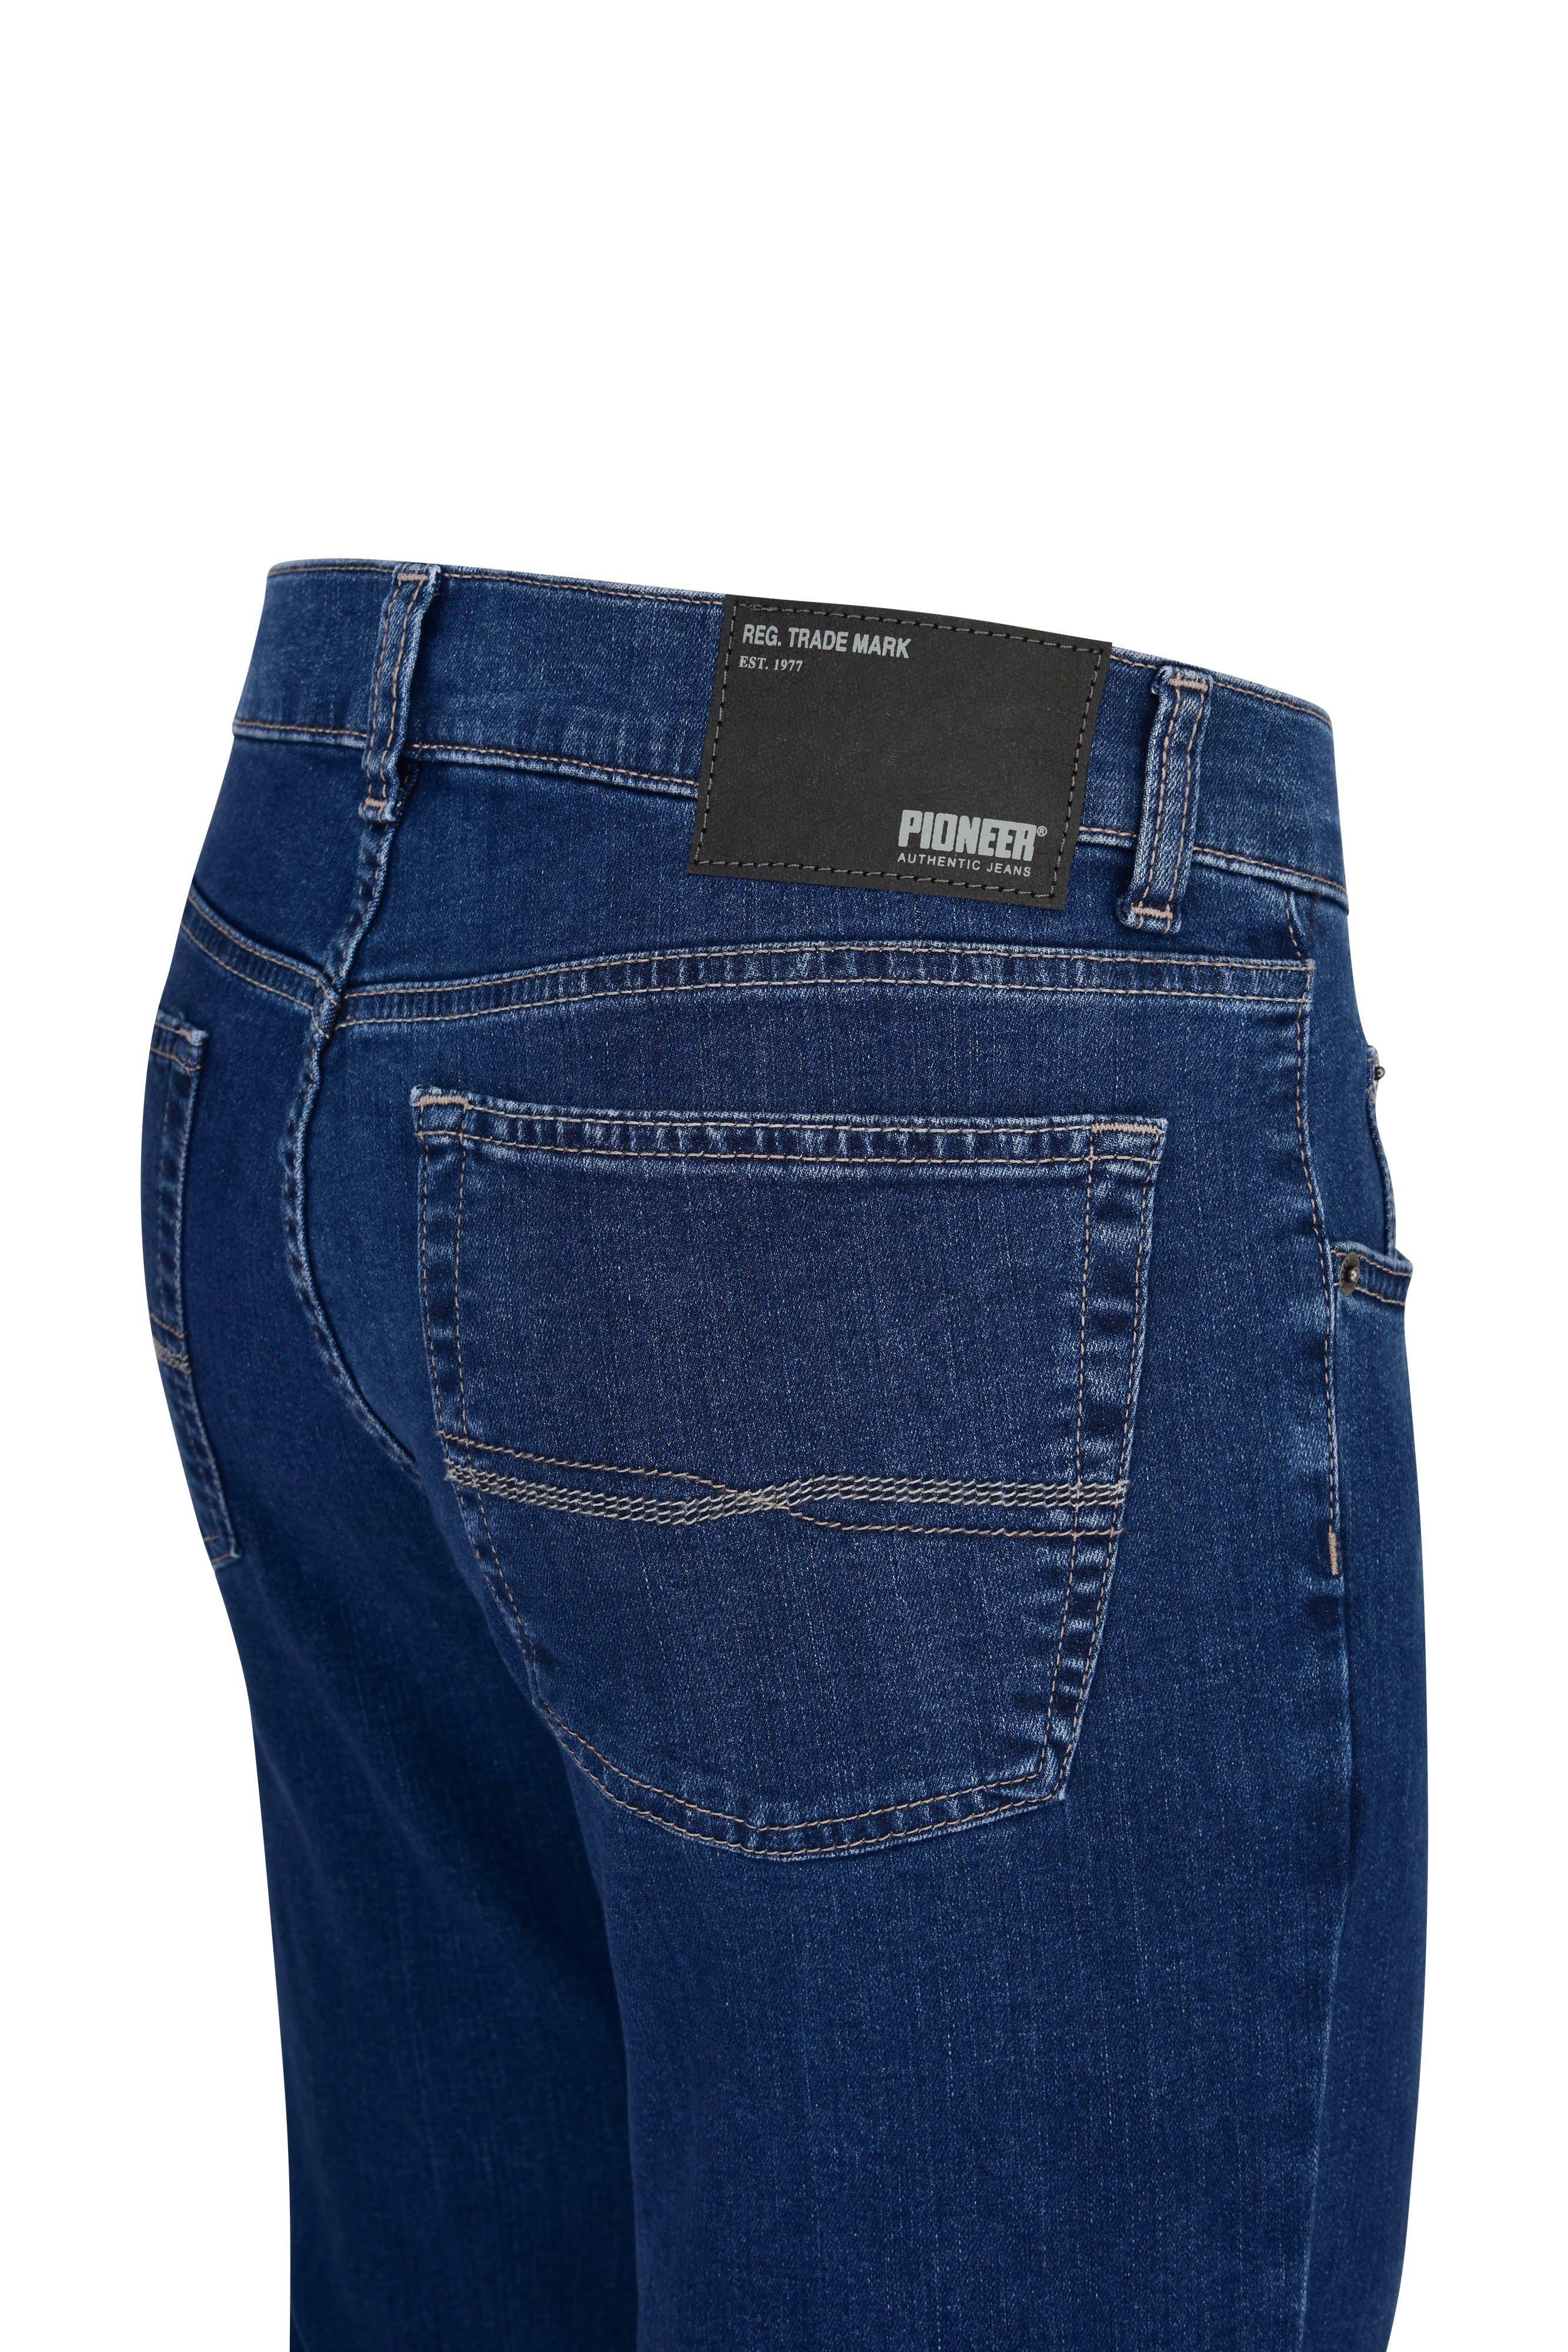 Jeans Edition Manufaktur - 9818.05 Pioneer 5-Pocket-Jeans RON PIONEER Jeans premium blue Authentic mid 1184